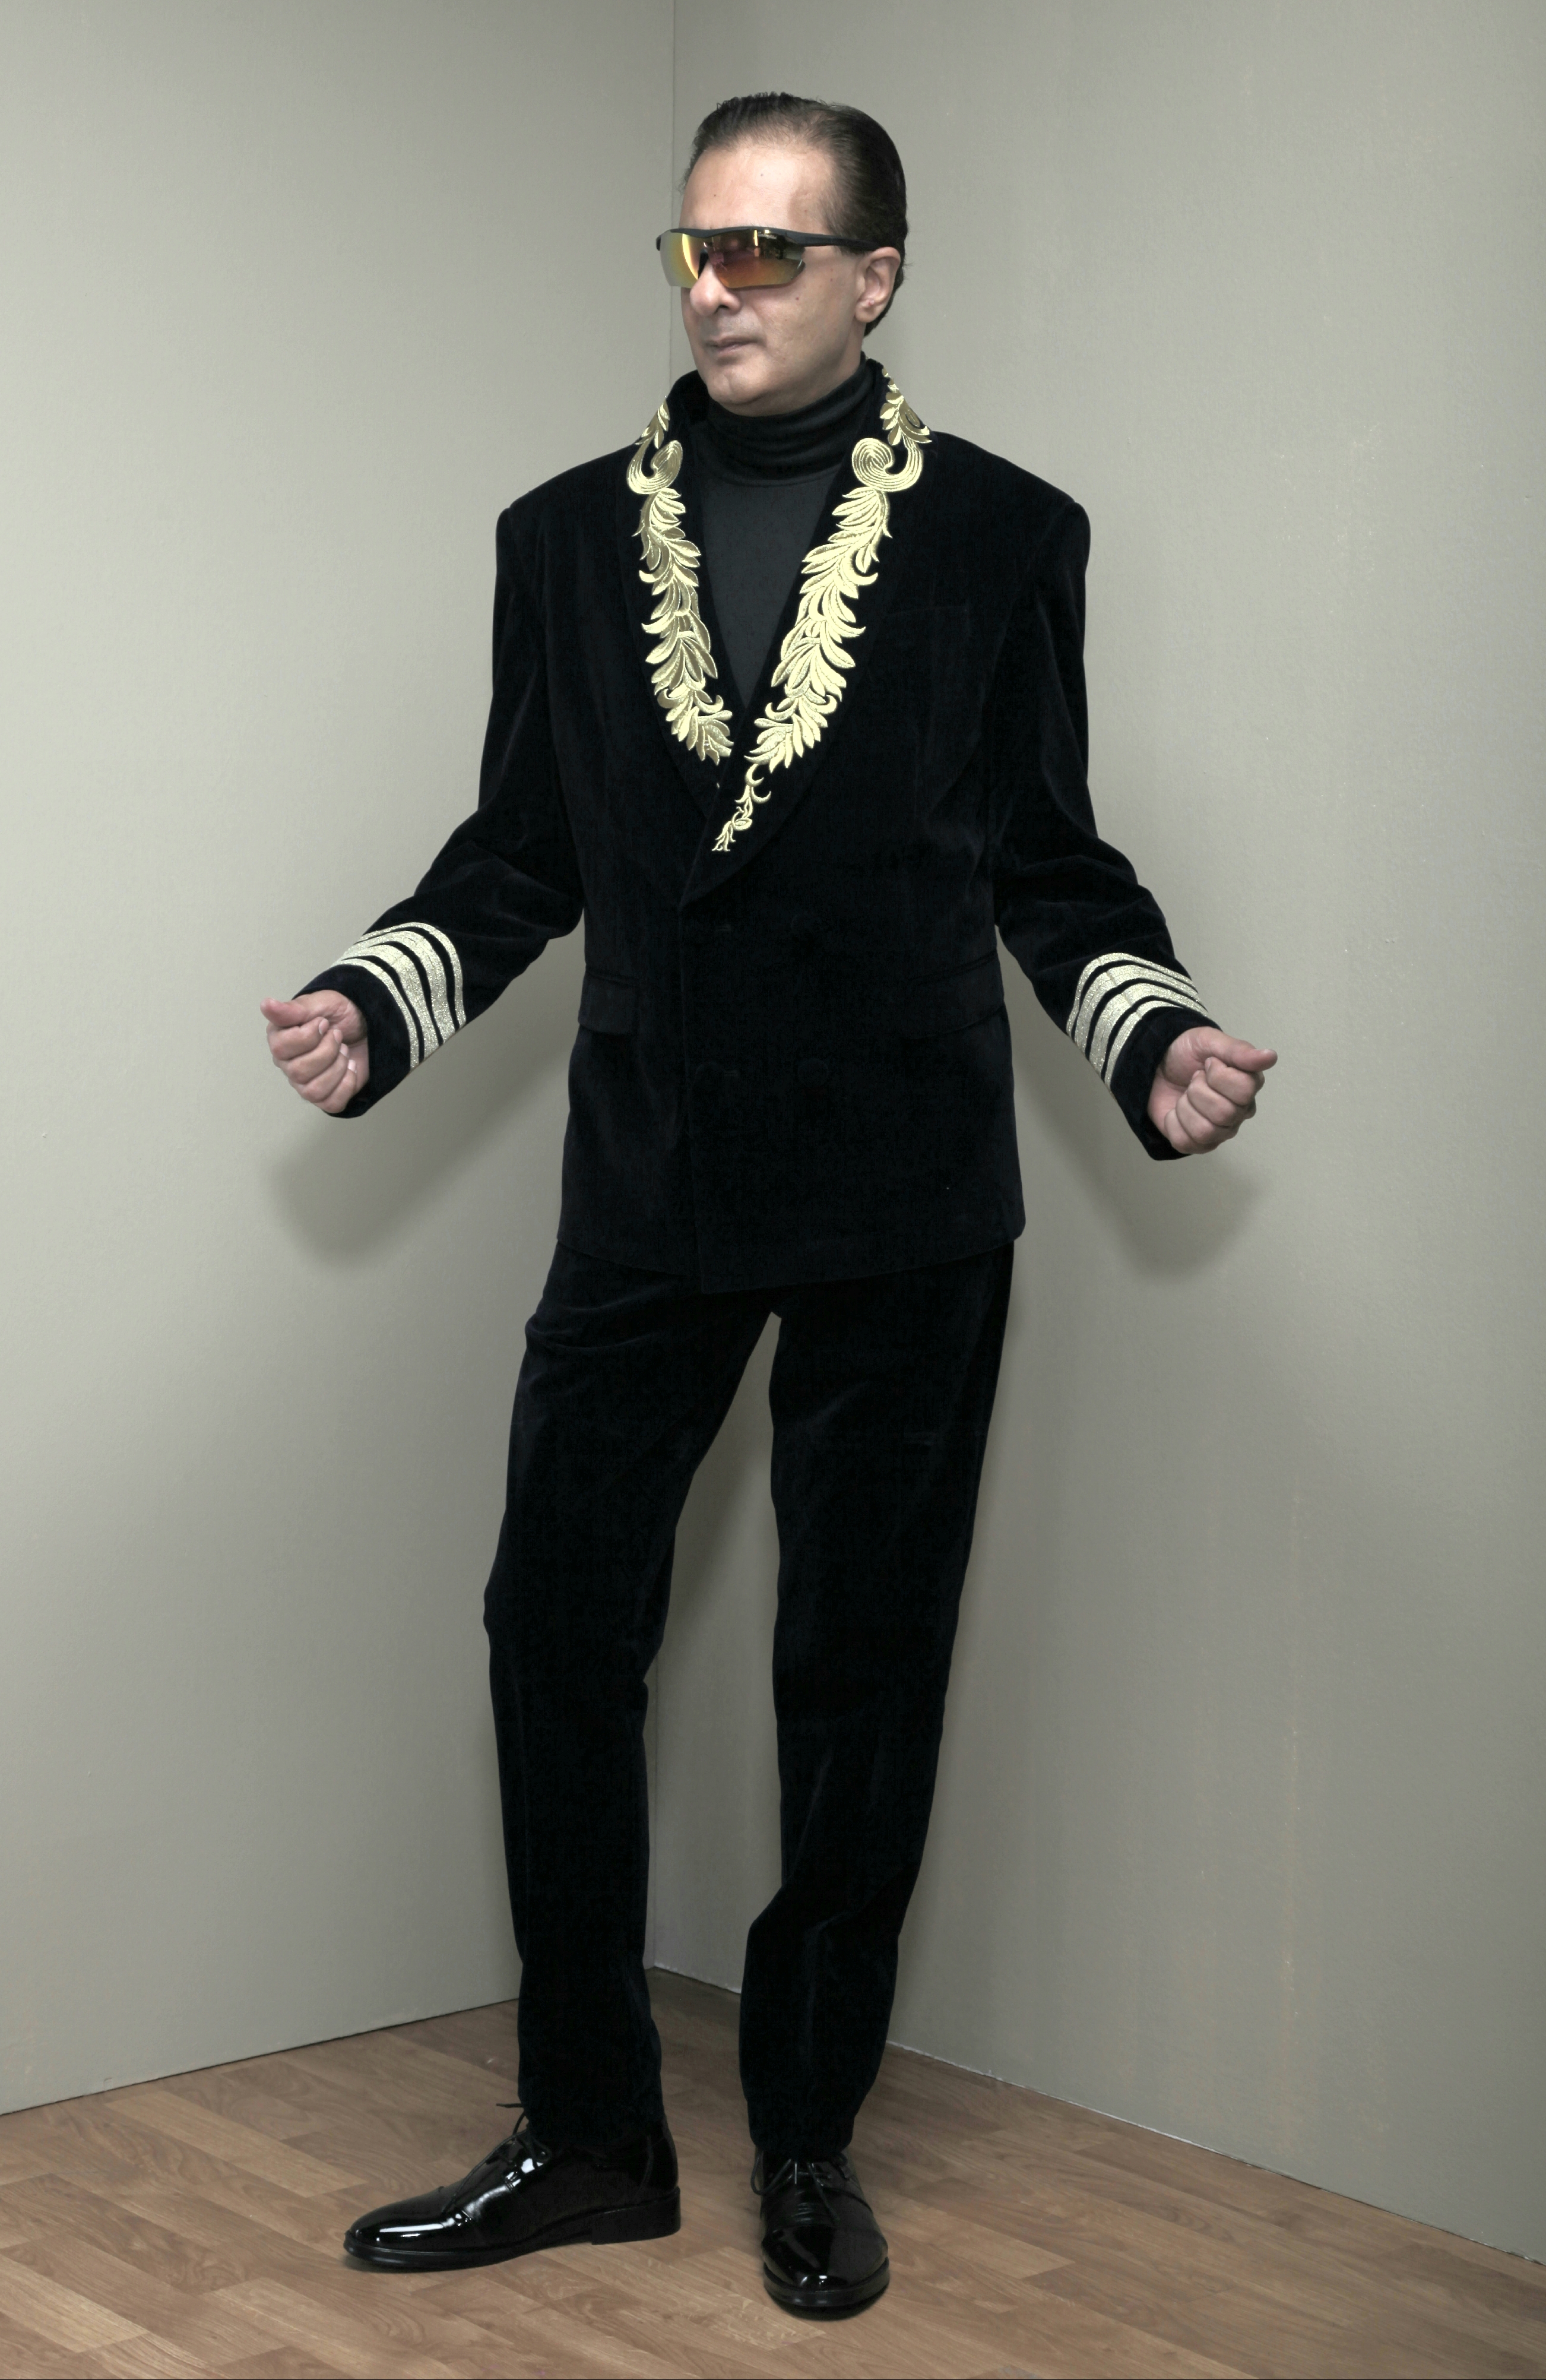 Suit Rental Suits Rent Hire Designer My Singapore Tailor Tailors Rentals Shop Tuxedo Black Tie Wedding Formal 30